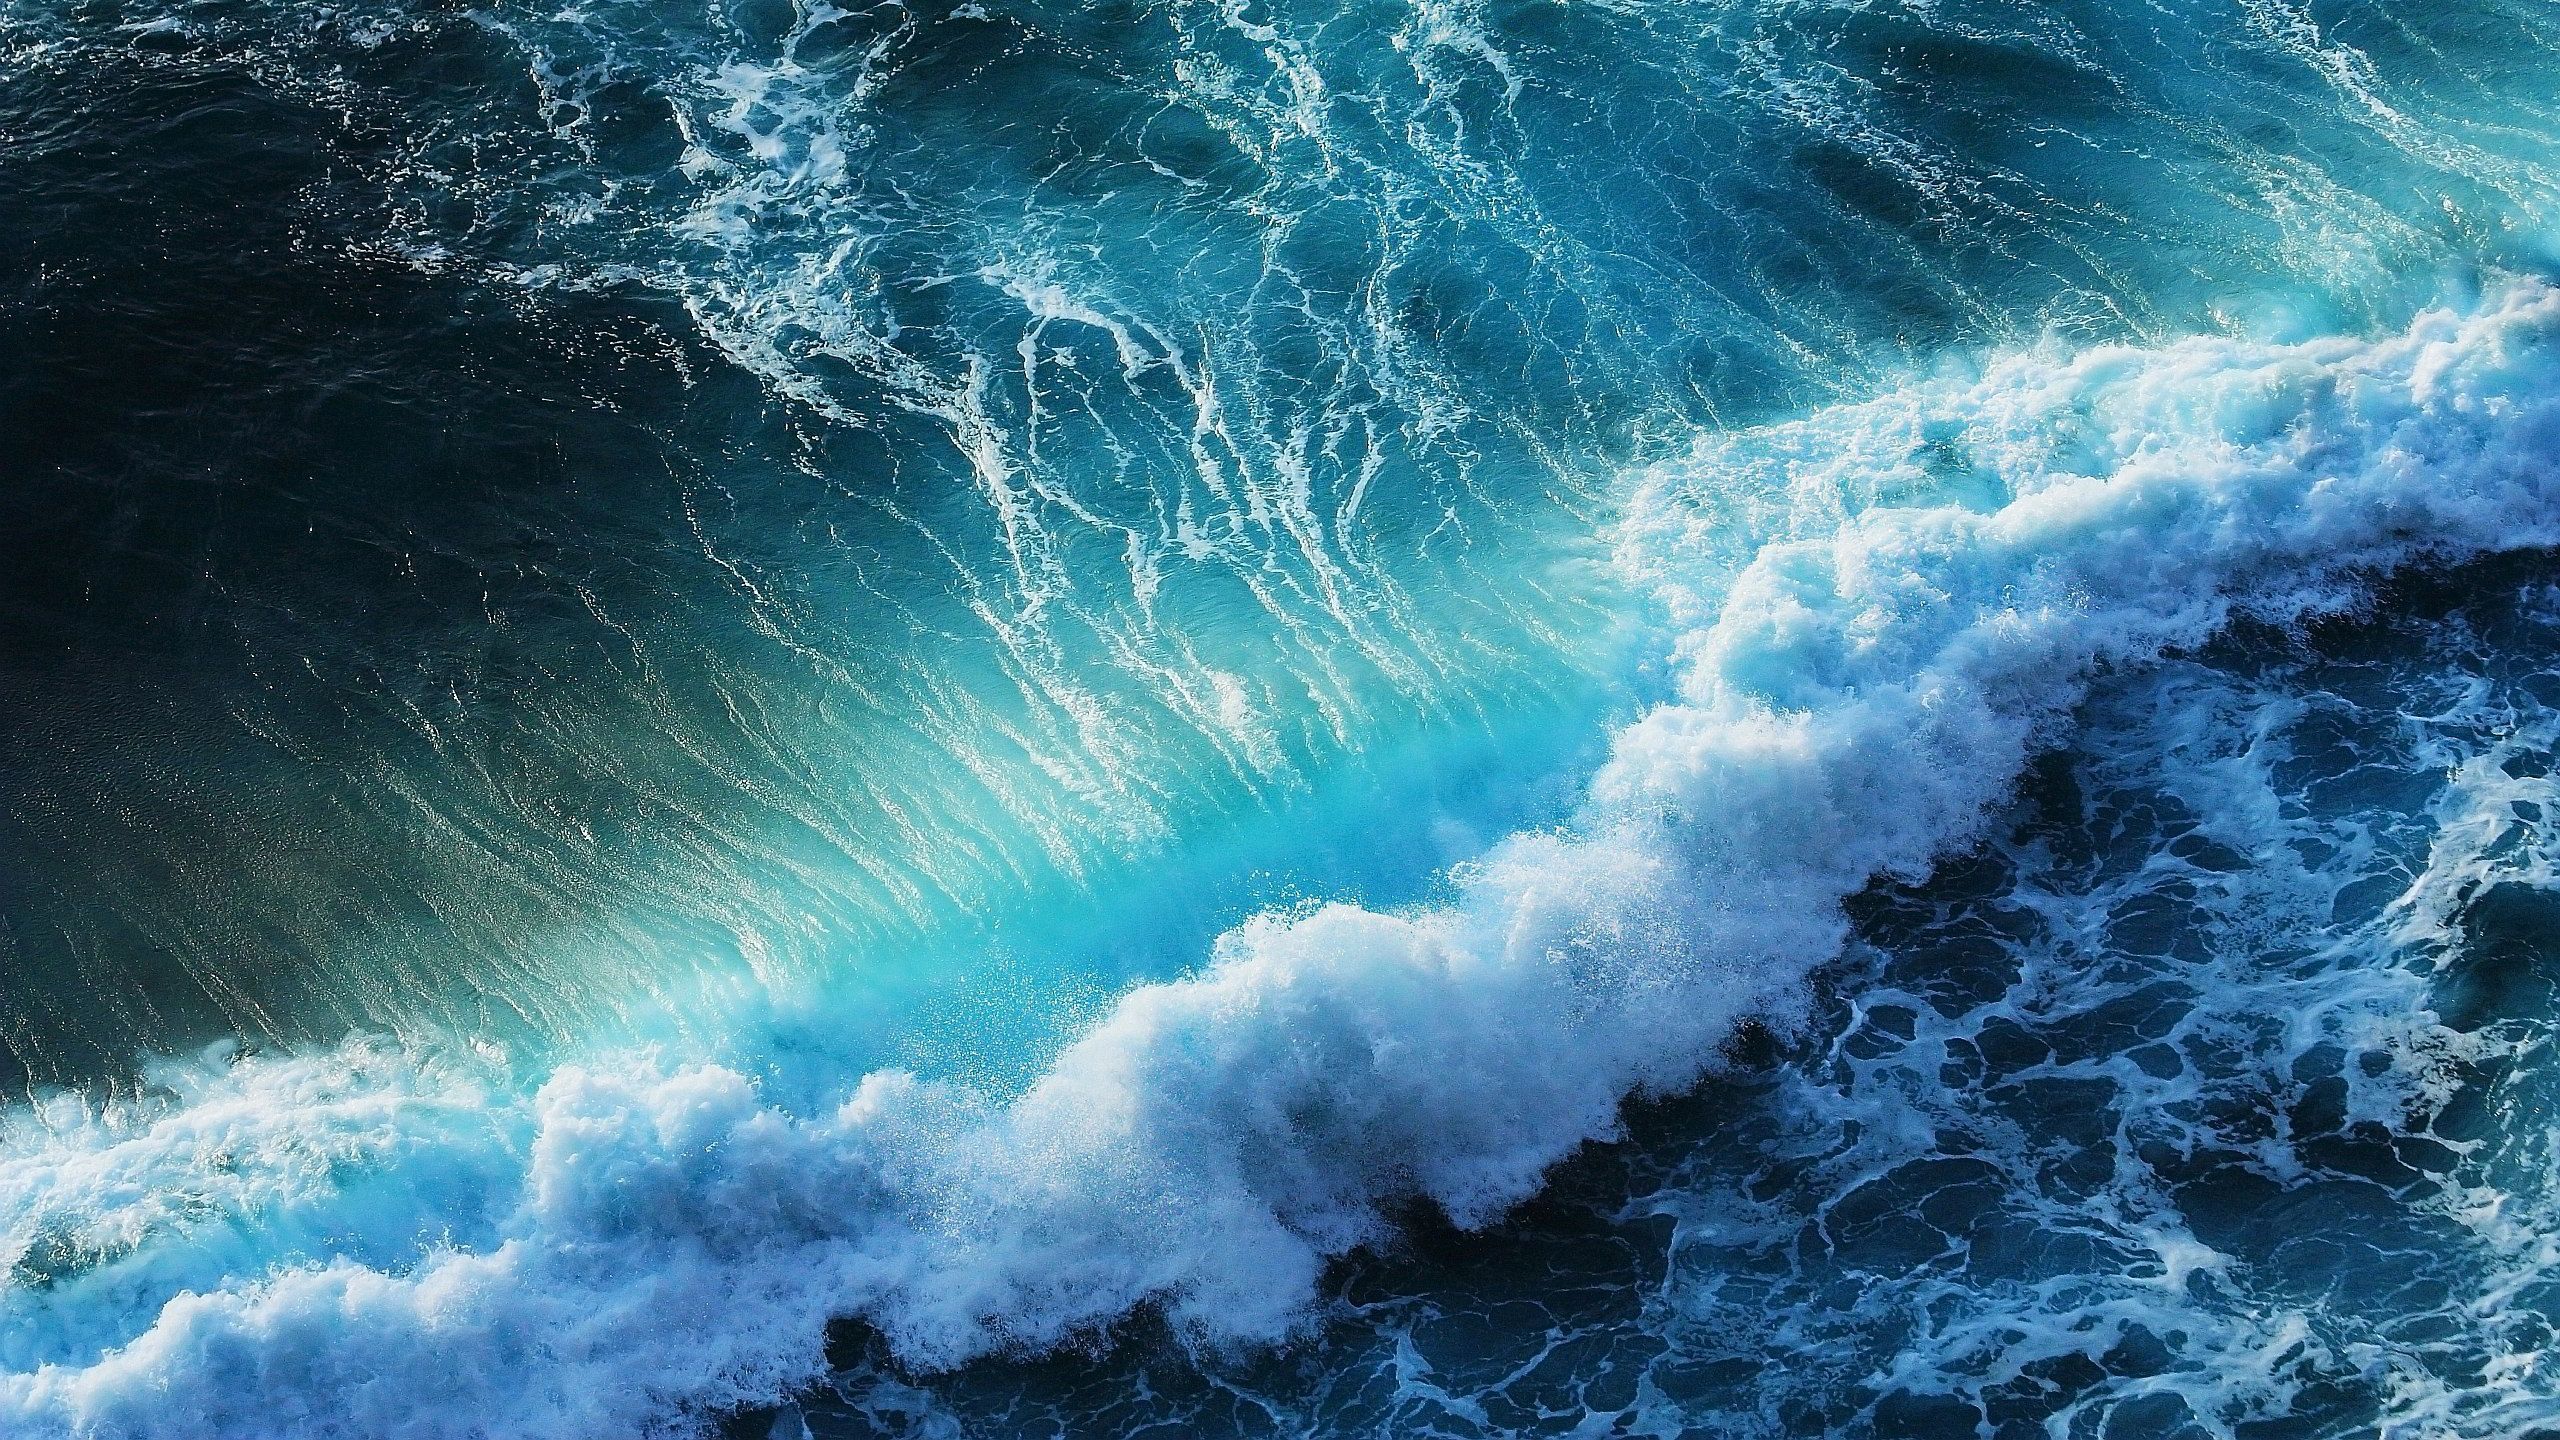 Fondos de pantalla de olas del mar - FondosMil